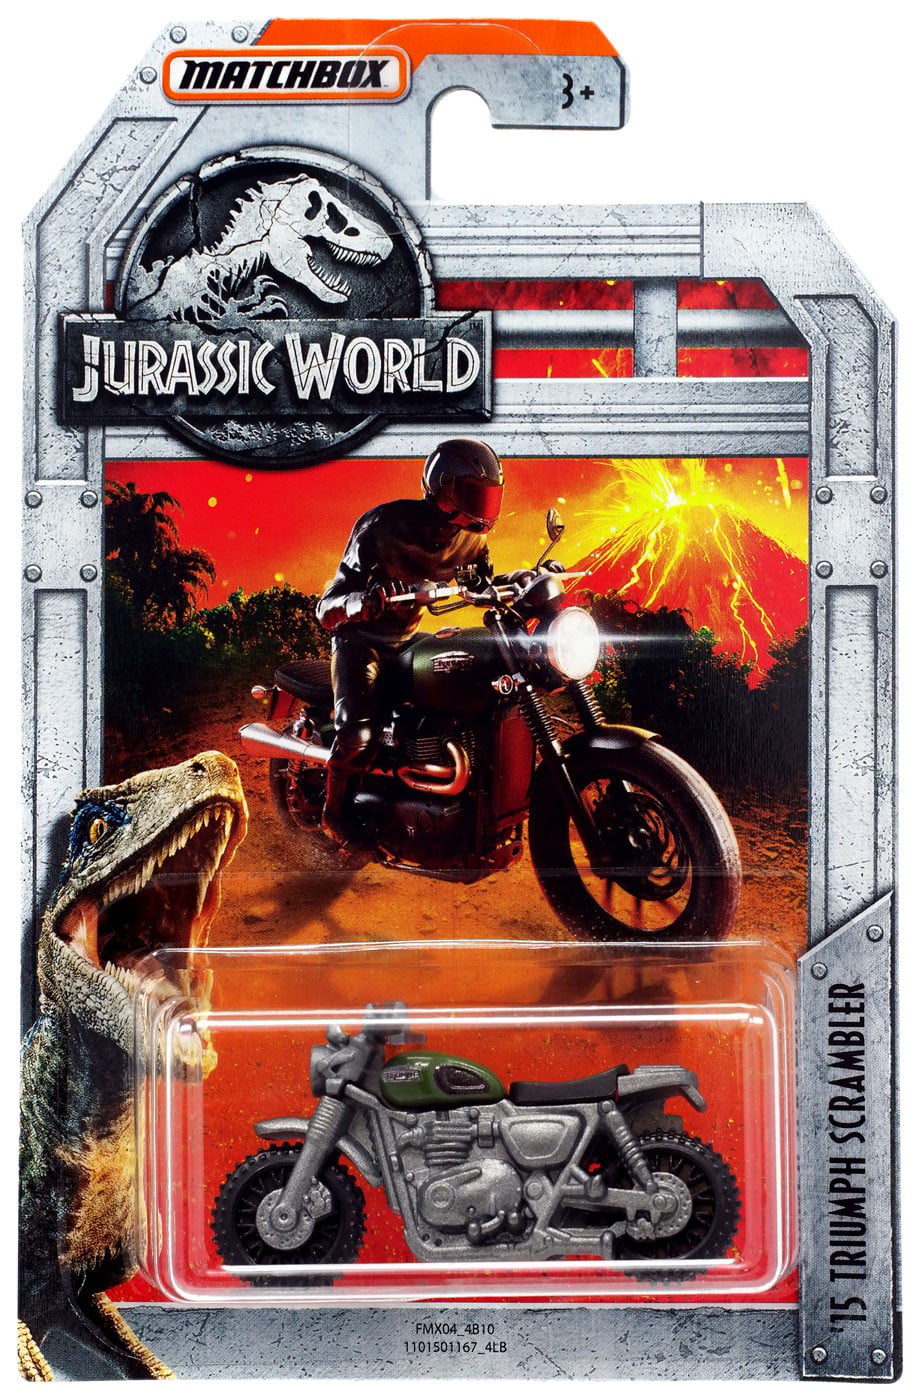 Matchbox '15 Triumph Scrambler Motorcycle Jurassic World new on card 